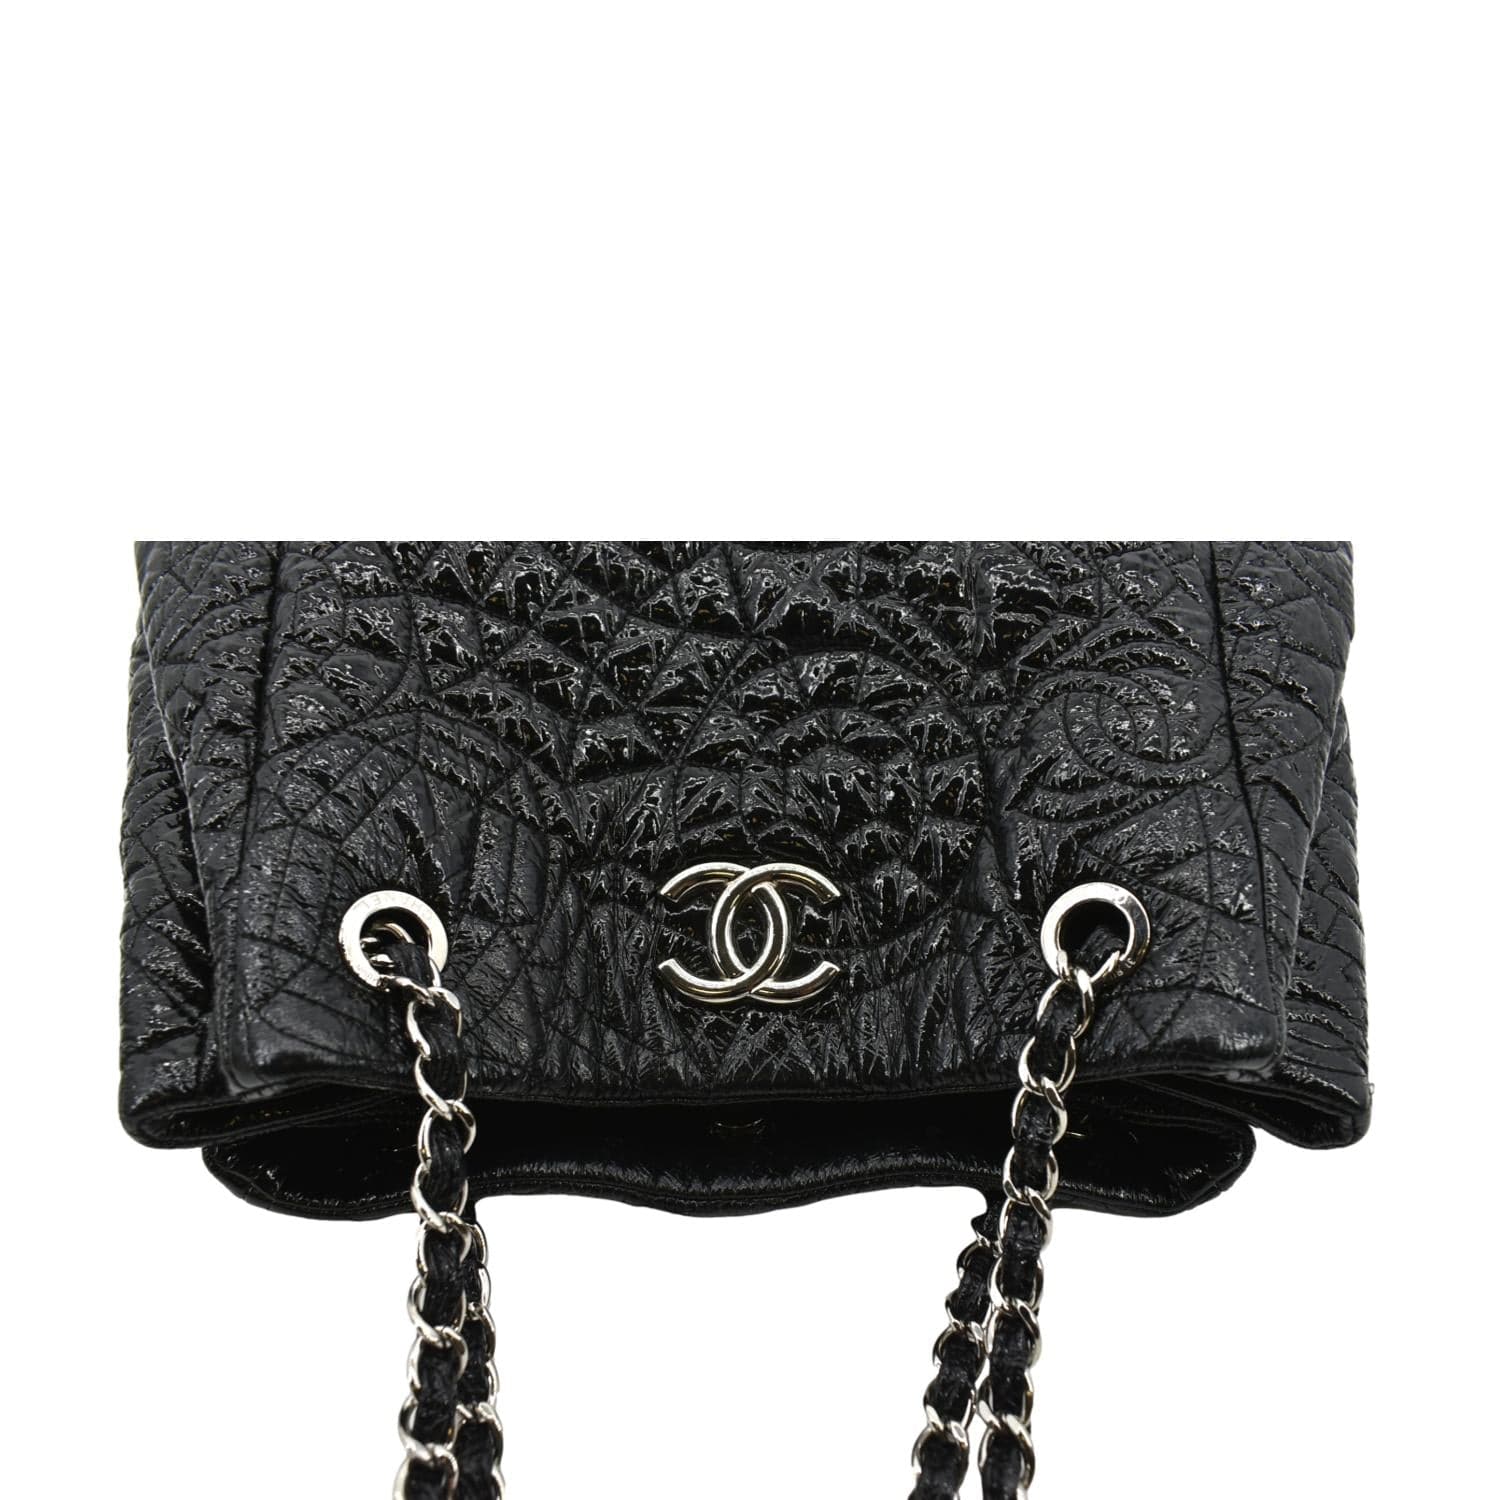 Chanel Camellia Handbag Raincoat Printed PVC - ShopStyle Clutches